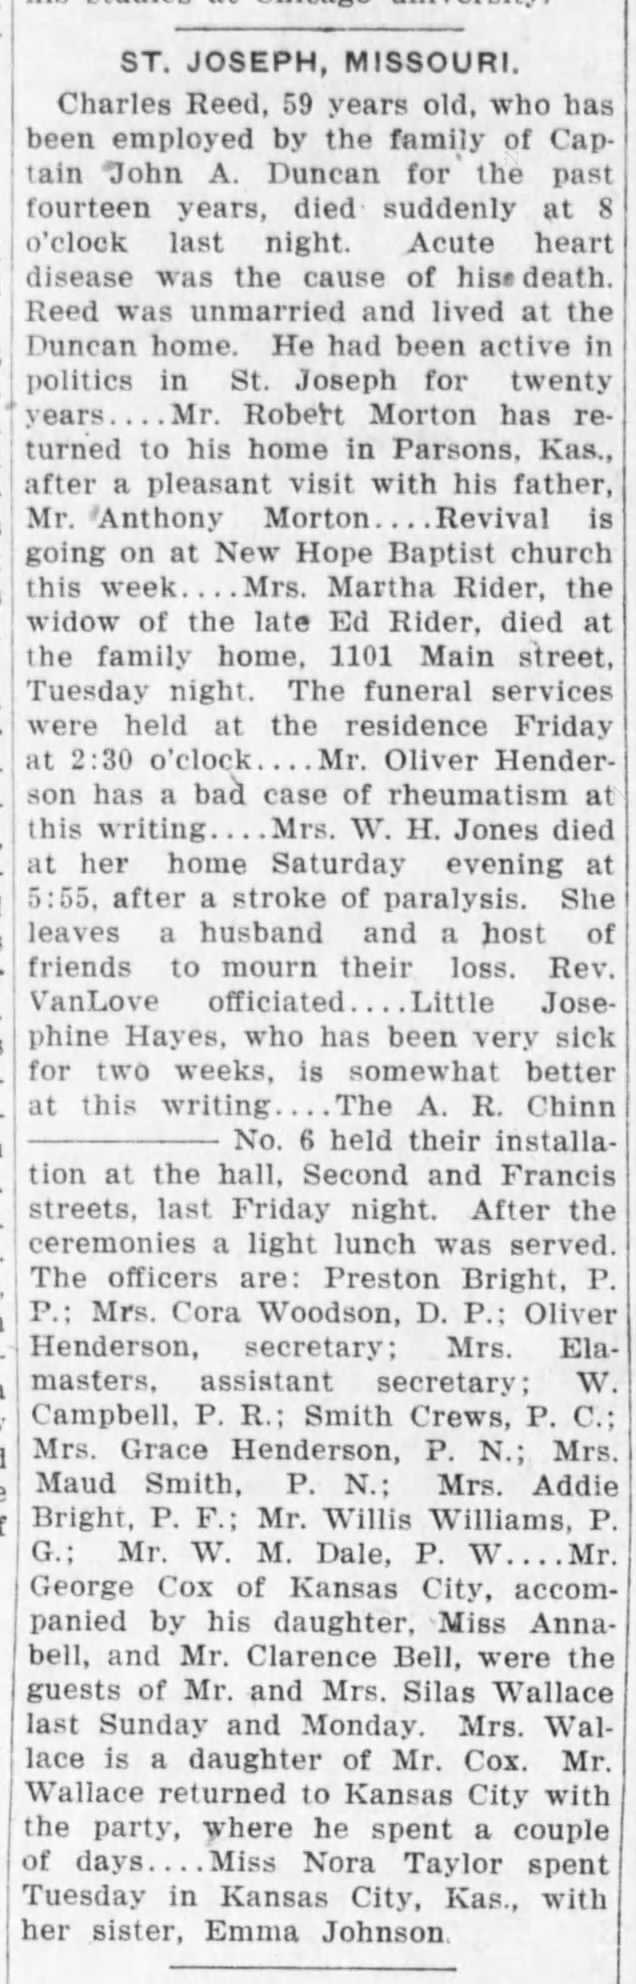 St. Joseph, Missouri news on March 31, 1917 on page 2